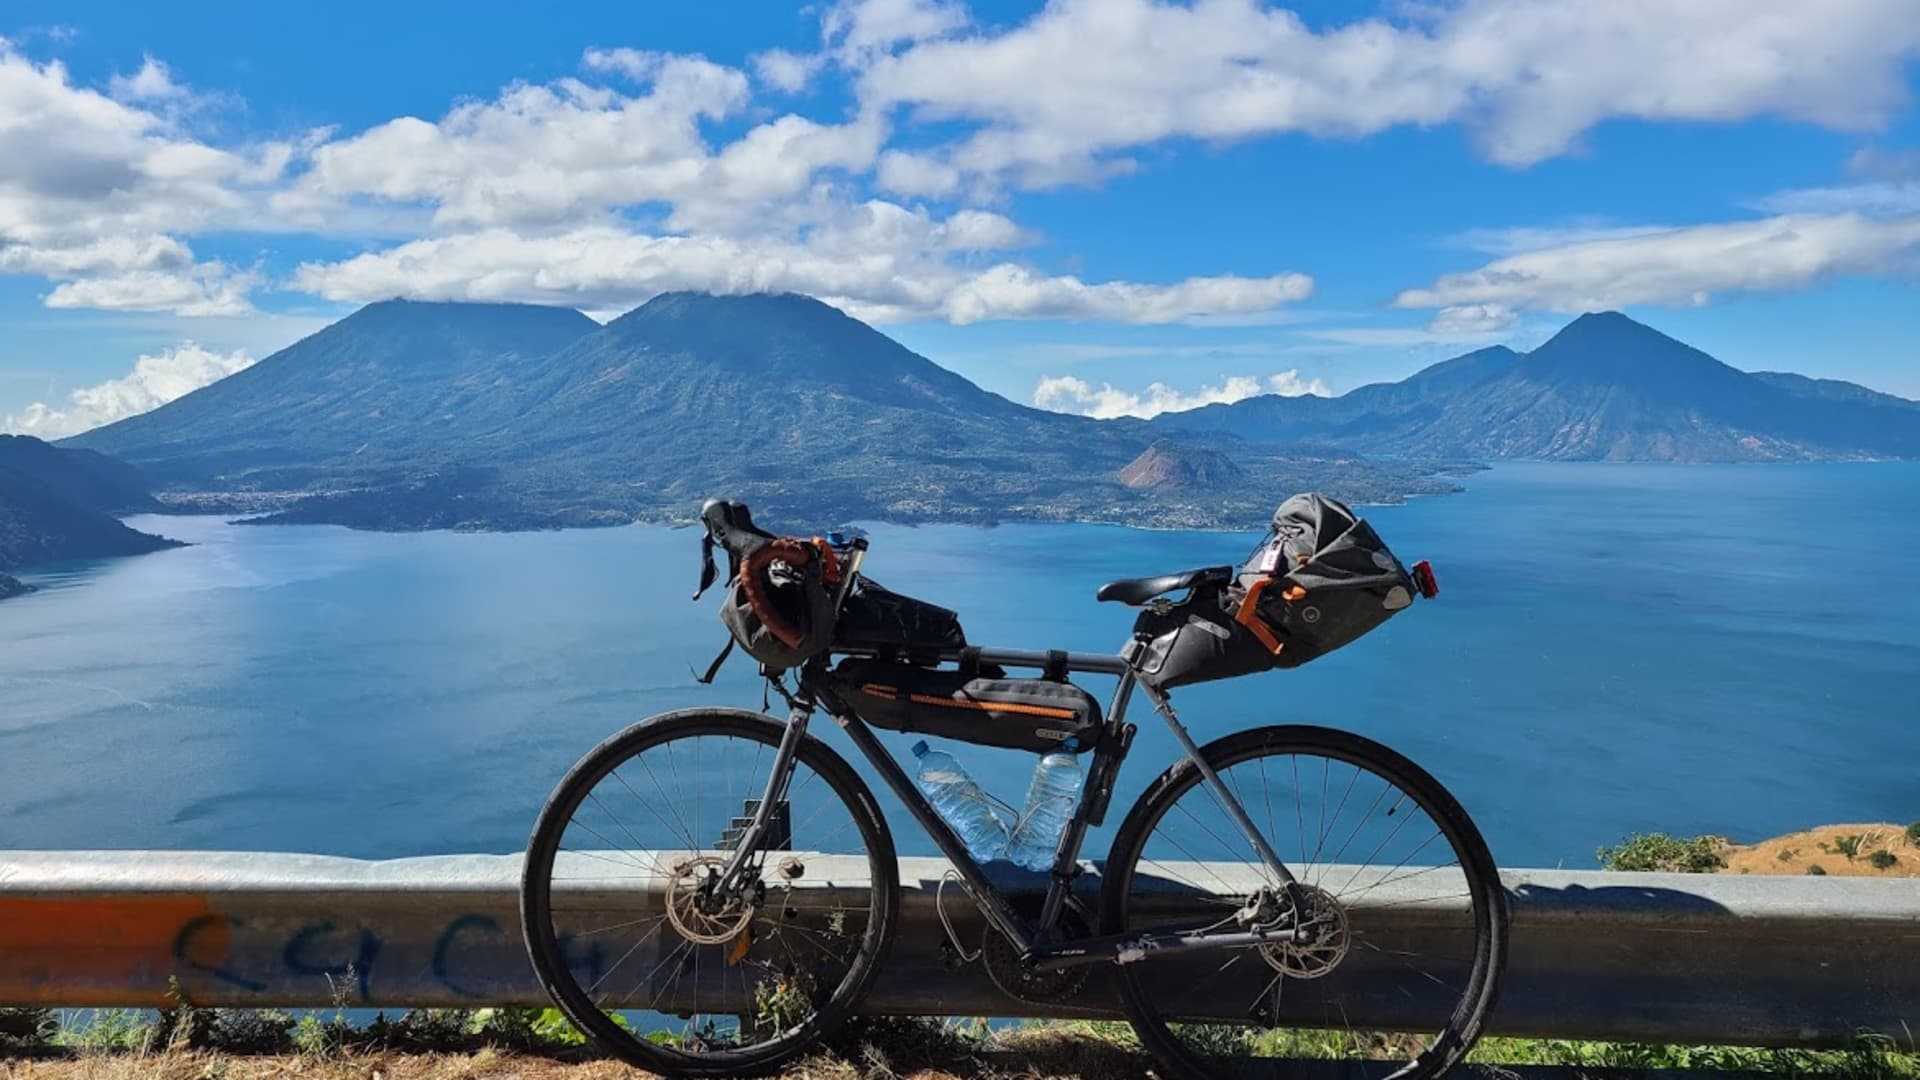 Andrew's bike in front of Lake Atitlan in Guatamala